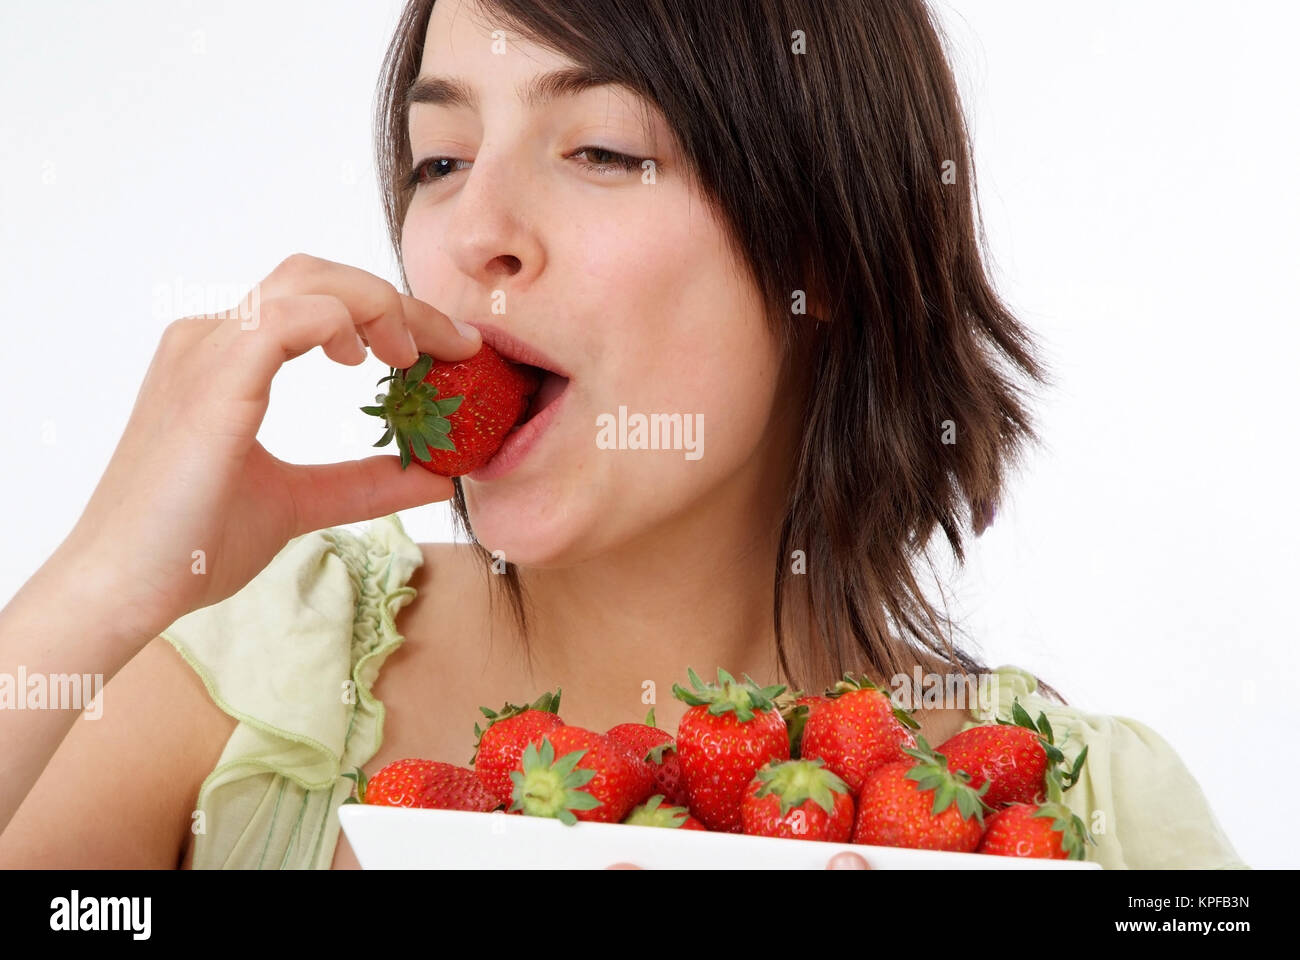 Junge Frau Isst Erdbeeren - junge Frau isst Erdbeeren Stockfoto